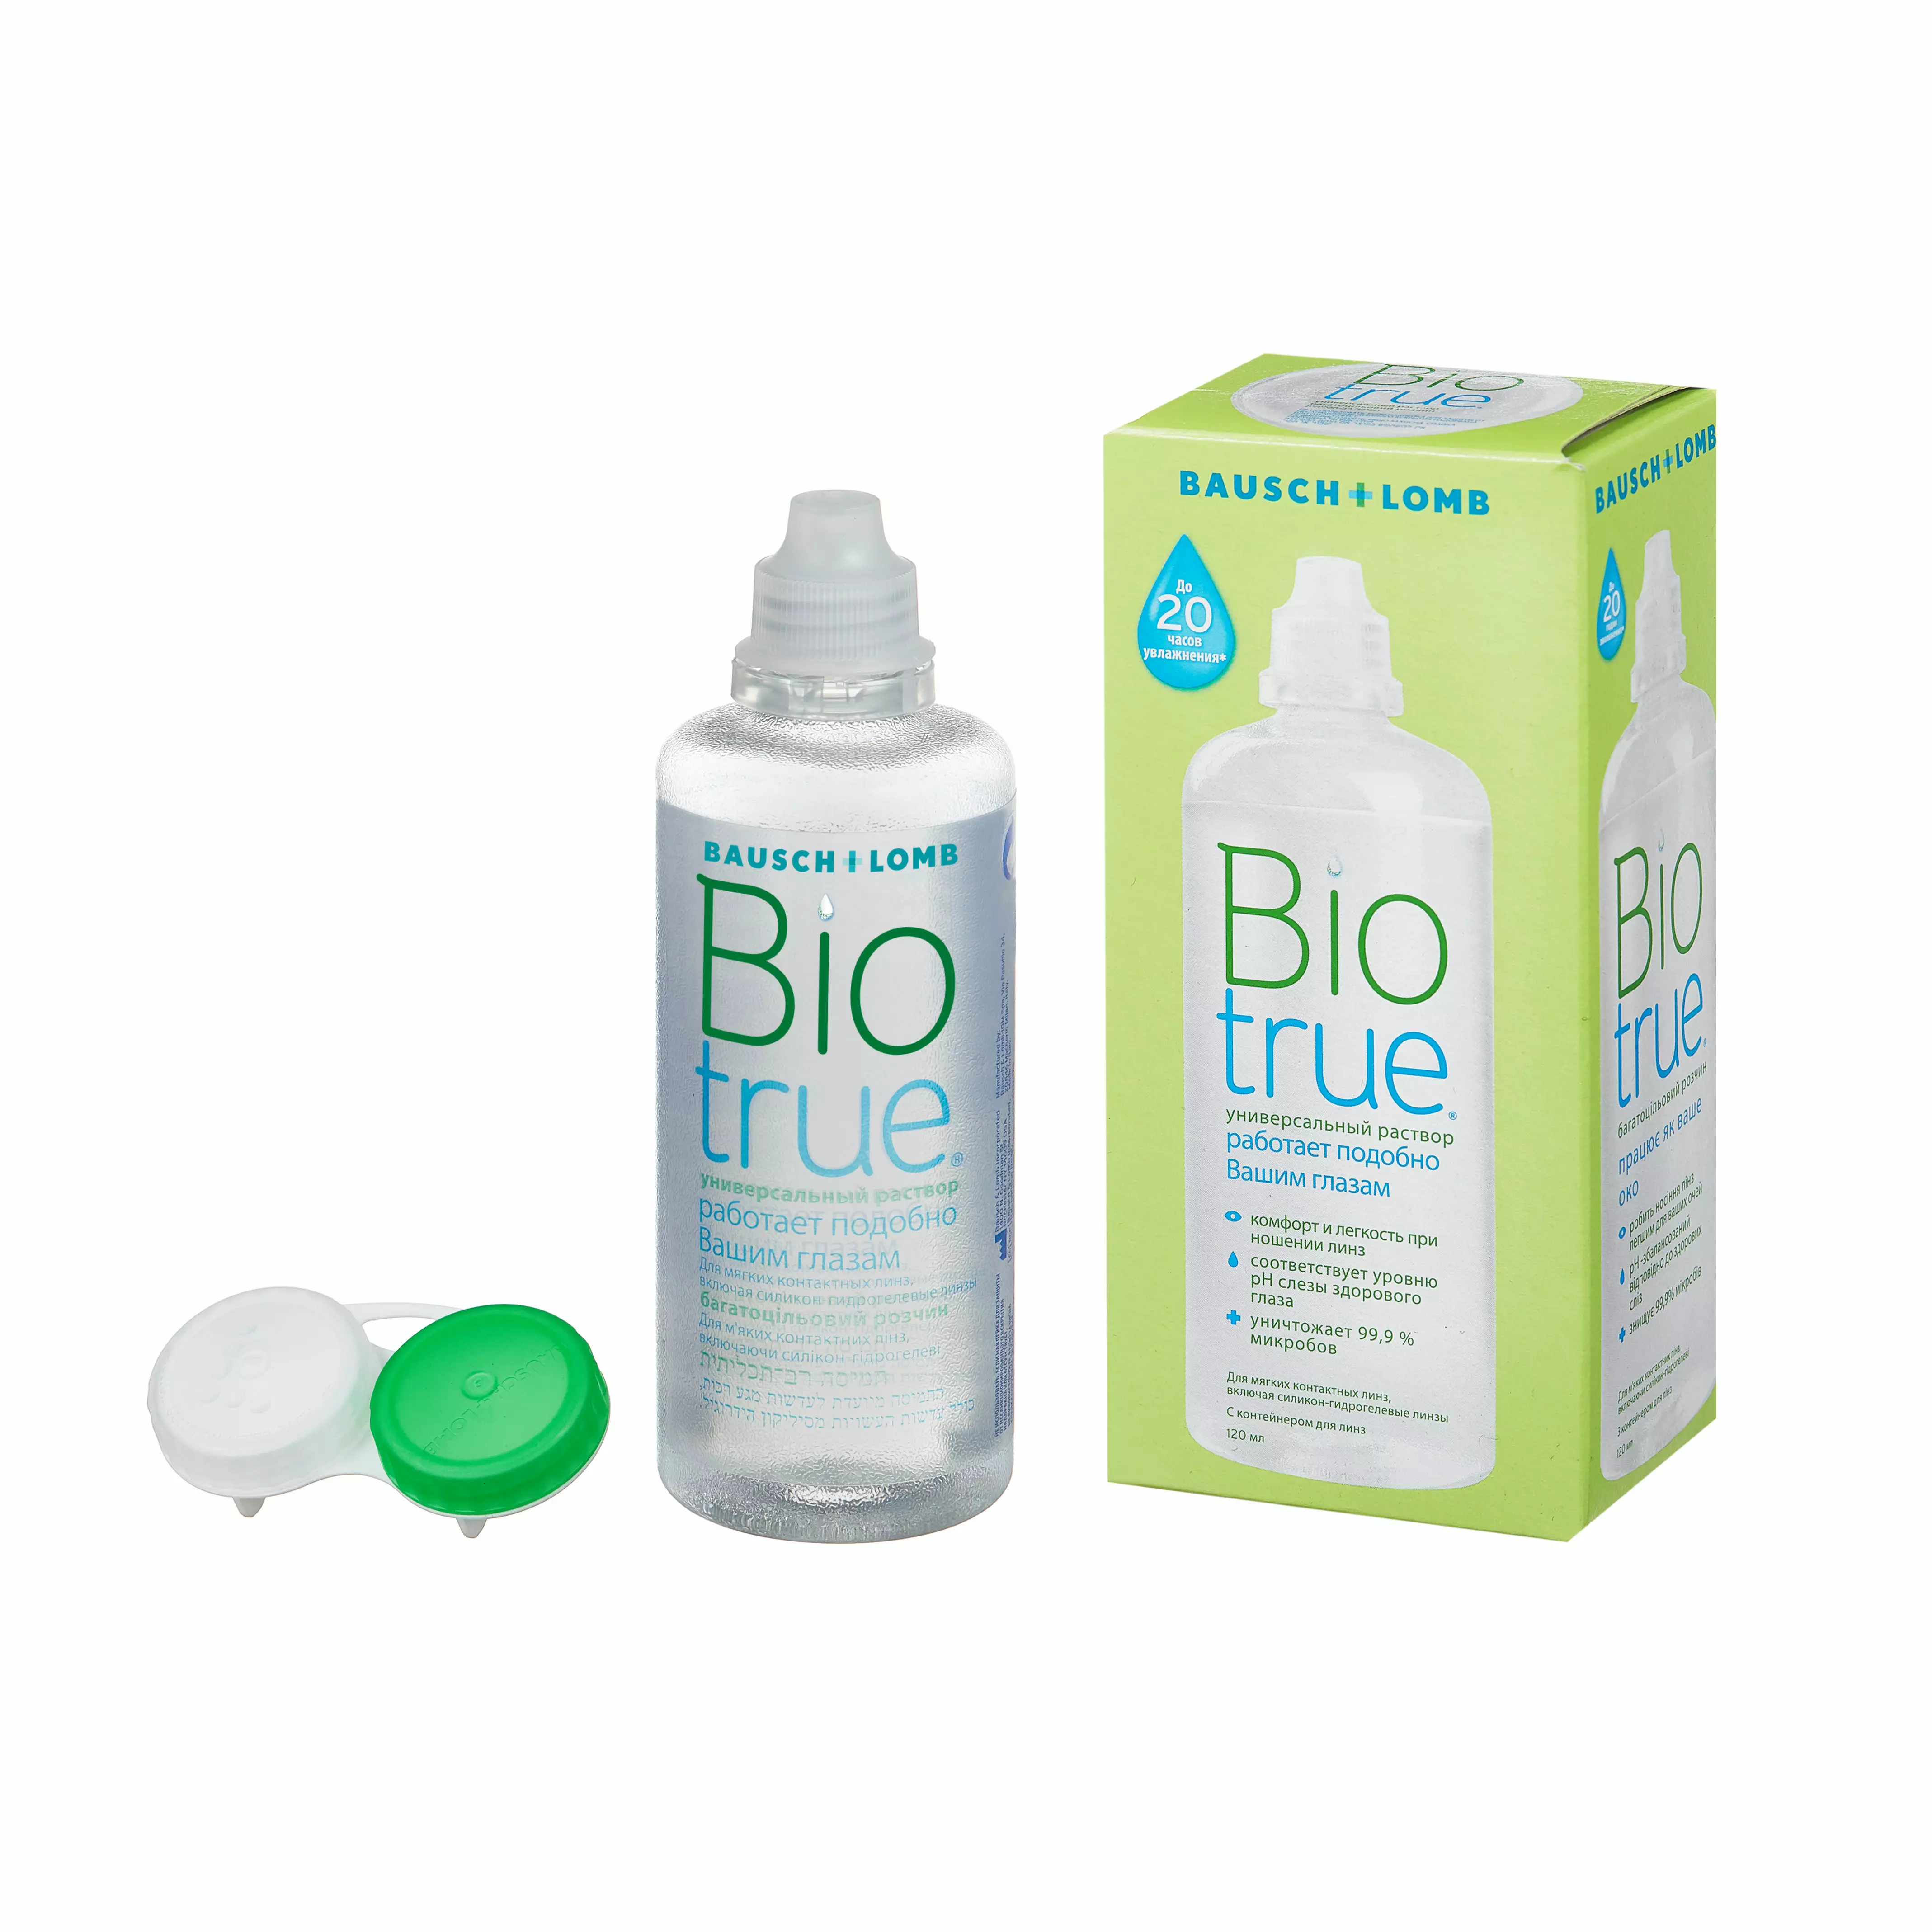 Раствор Biotrue (120 ml + контейнер) -1